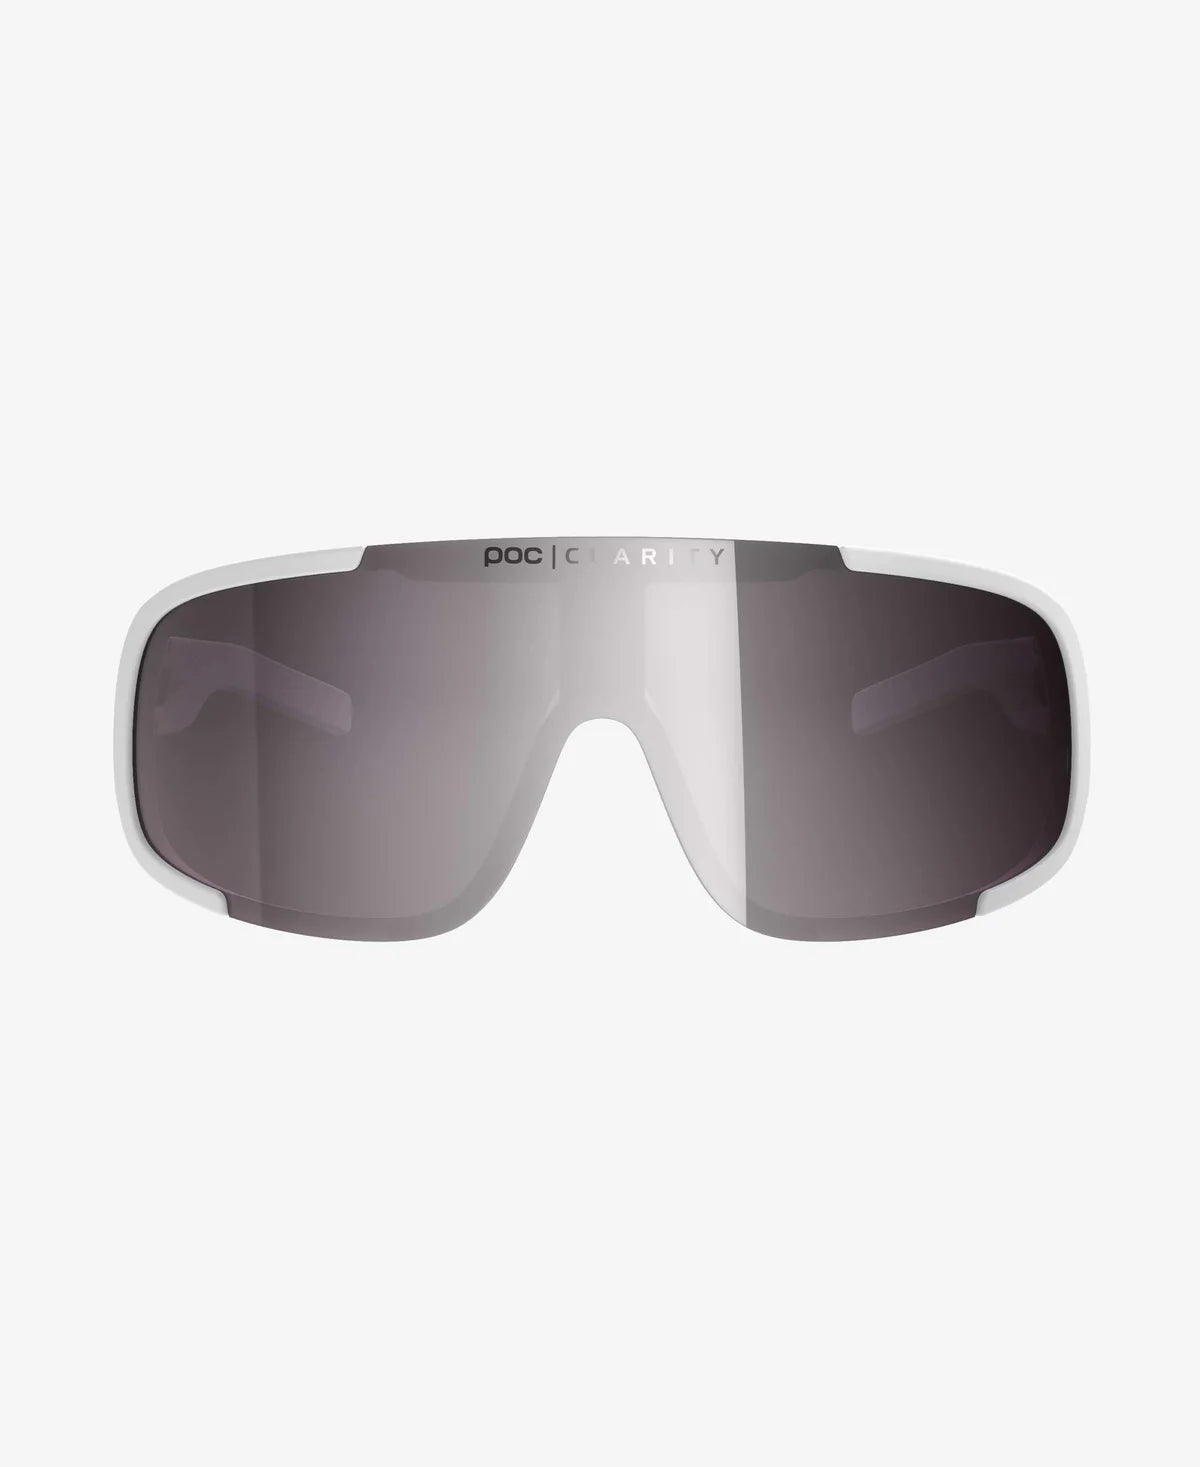 White/gray Aspire performance sunglasses